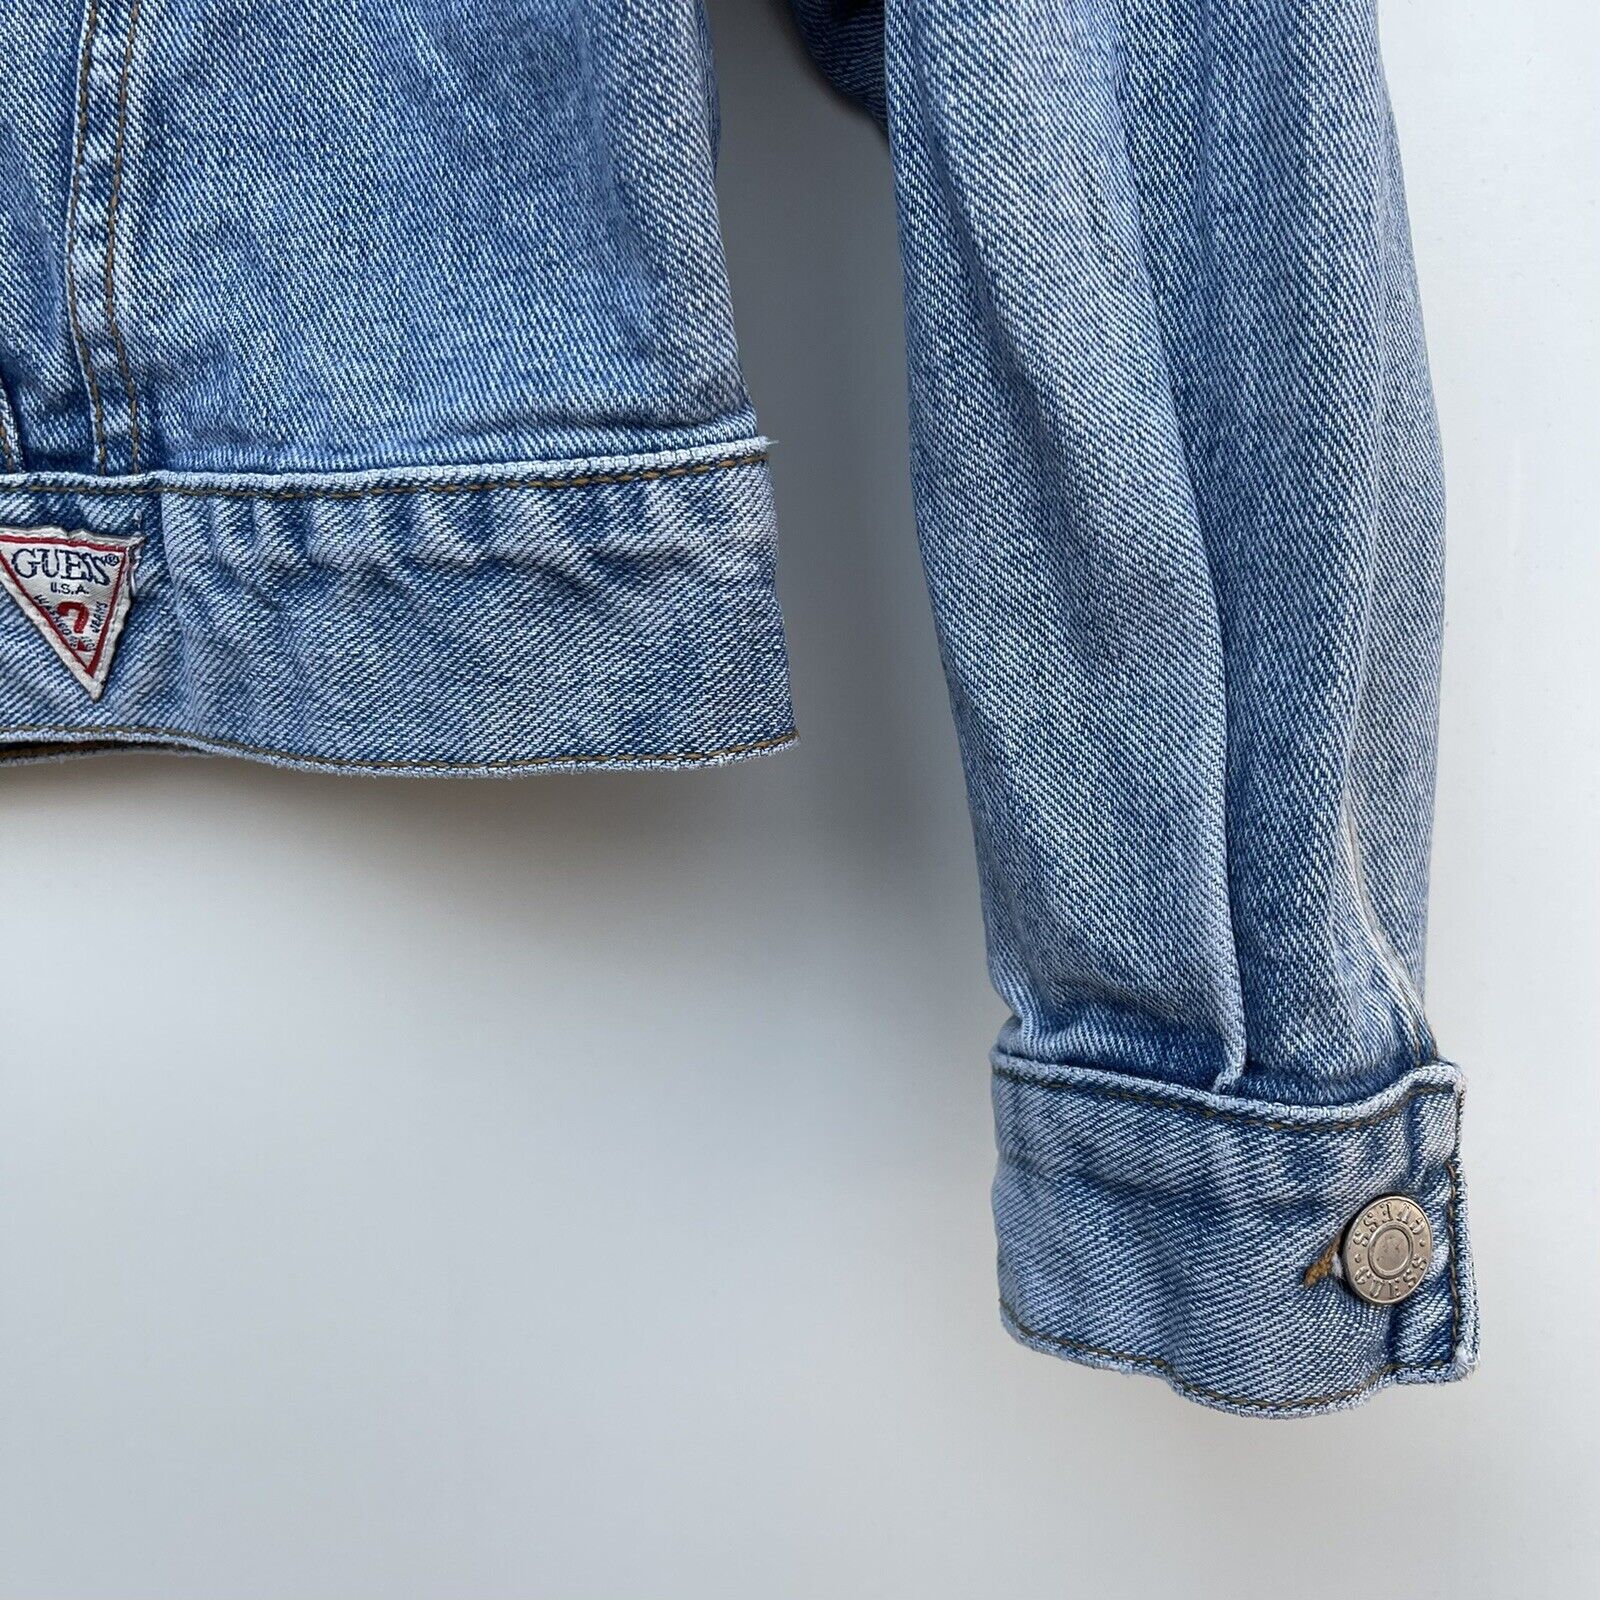 Guess Jeans Vintage Denim Jacket Button Front Blu… - image 7